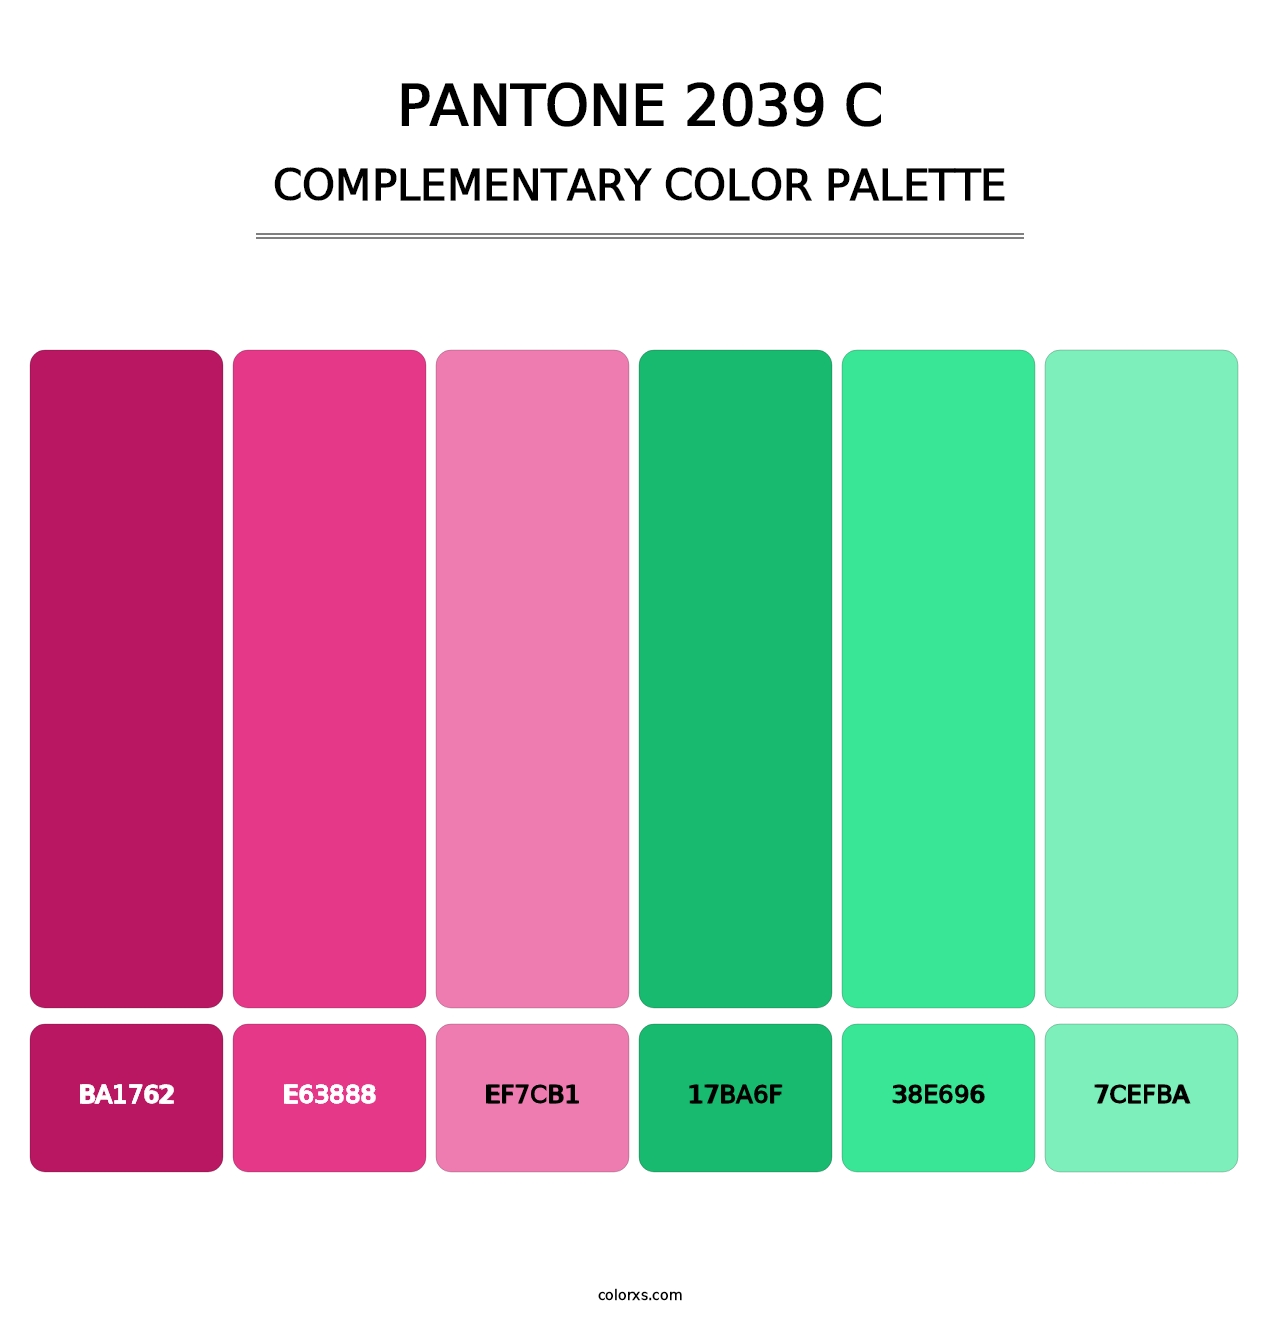 PANTONE 2039 C - Complementary Color Palette